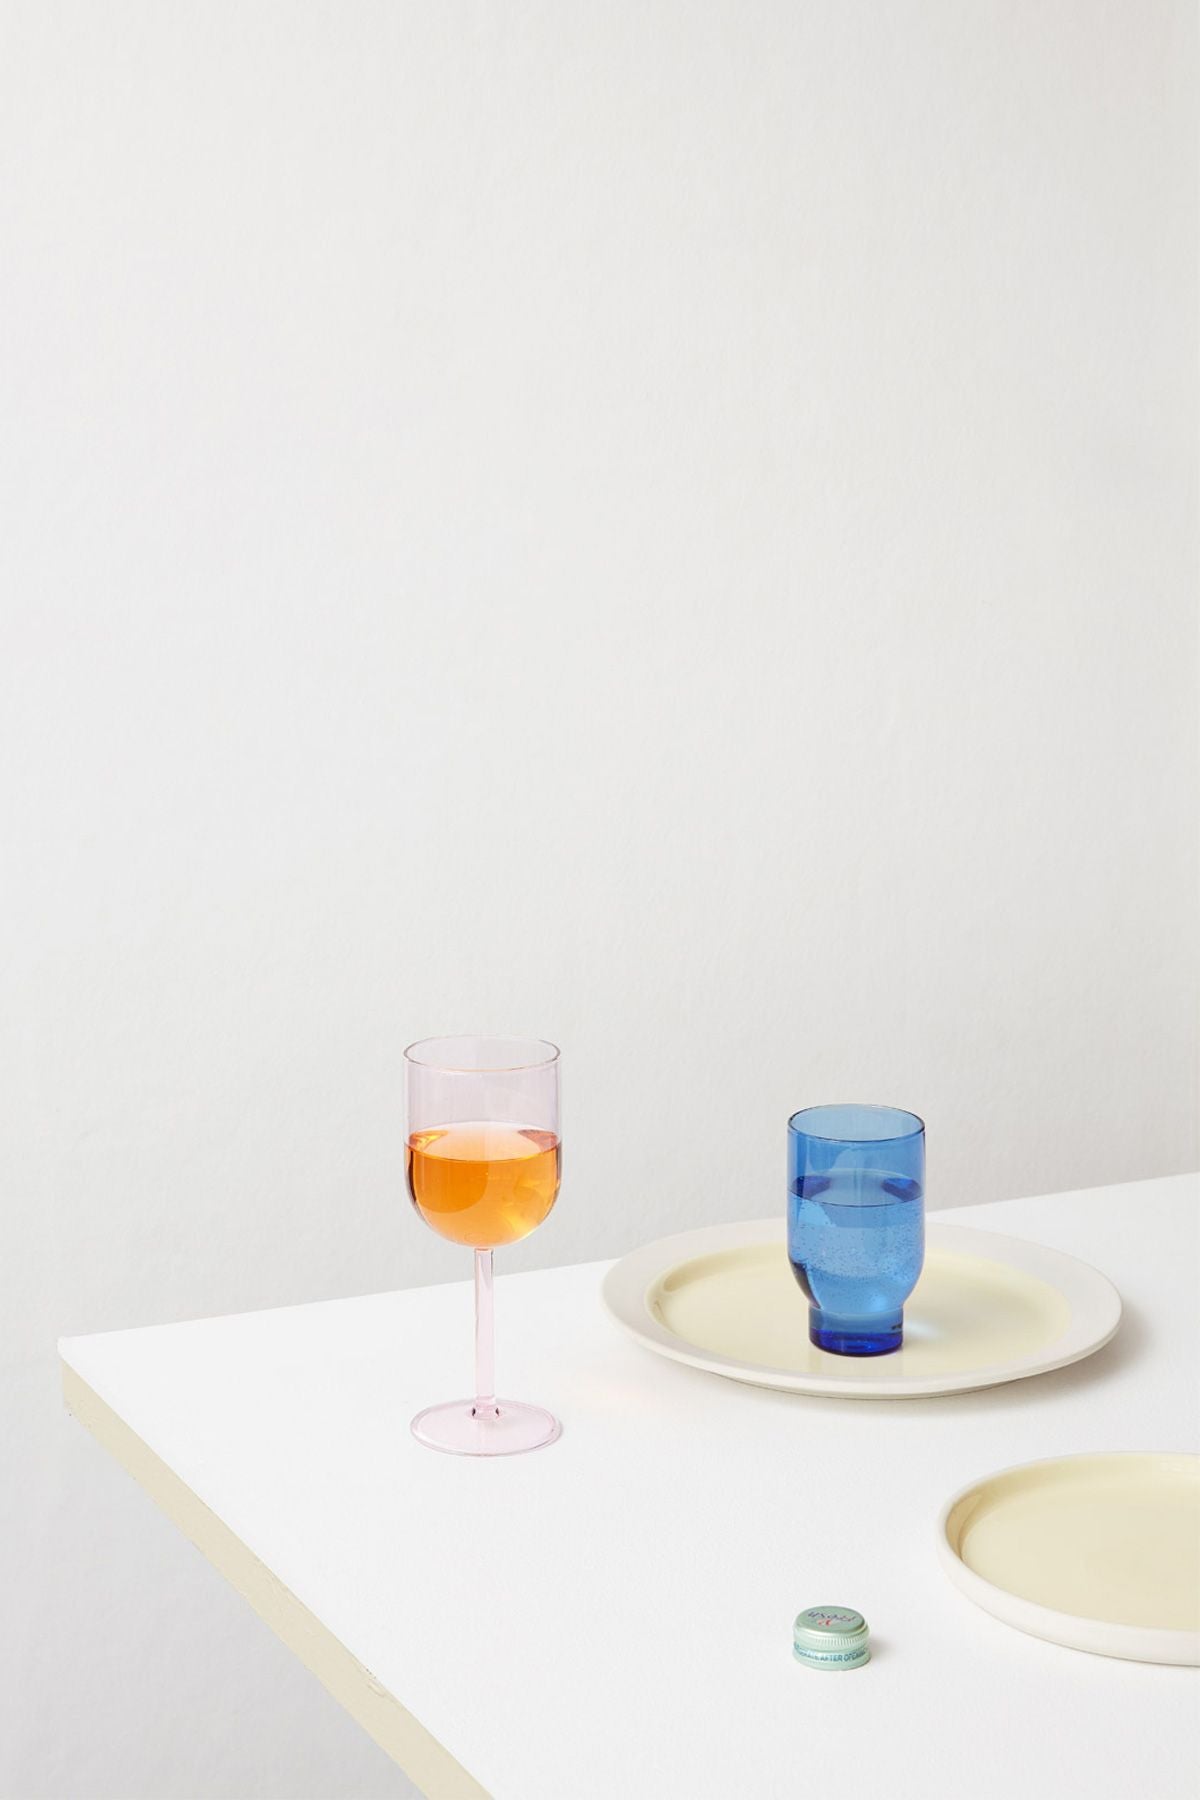 Studio om glasvareresæt med 2 vandbriller, blå